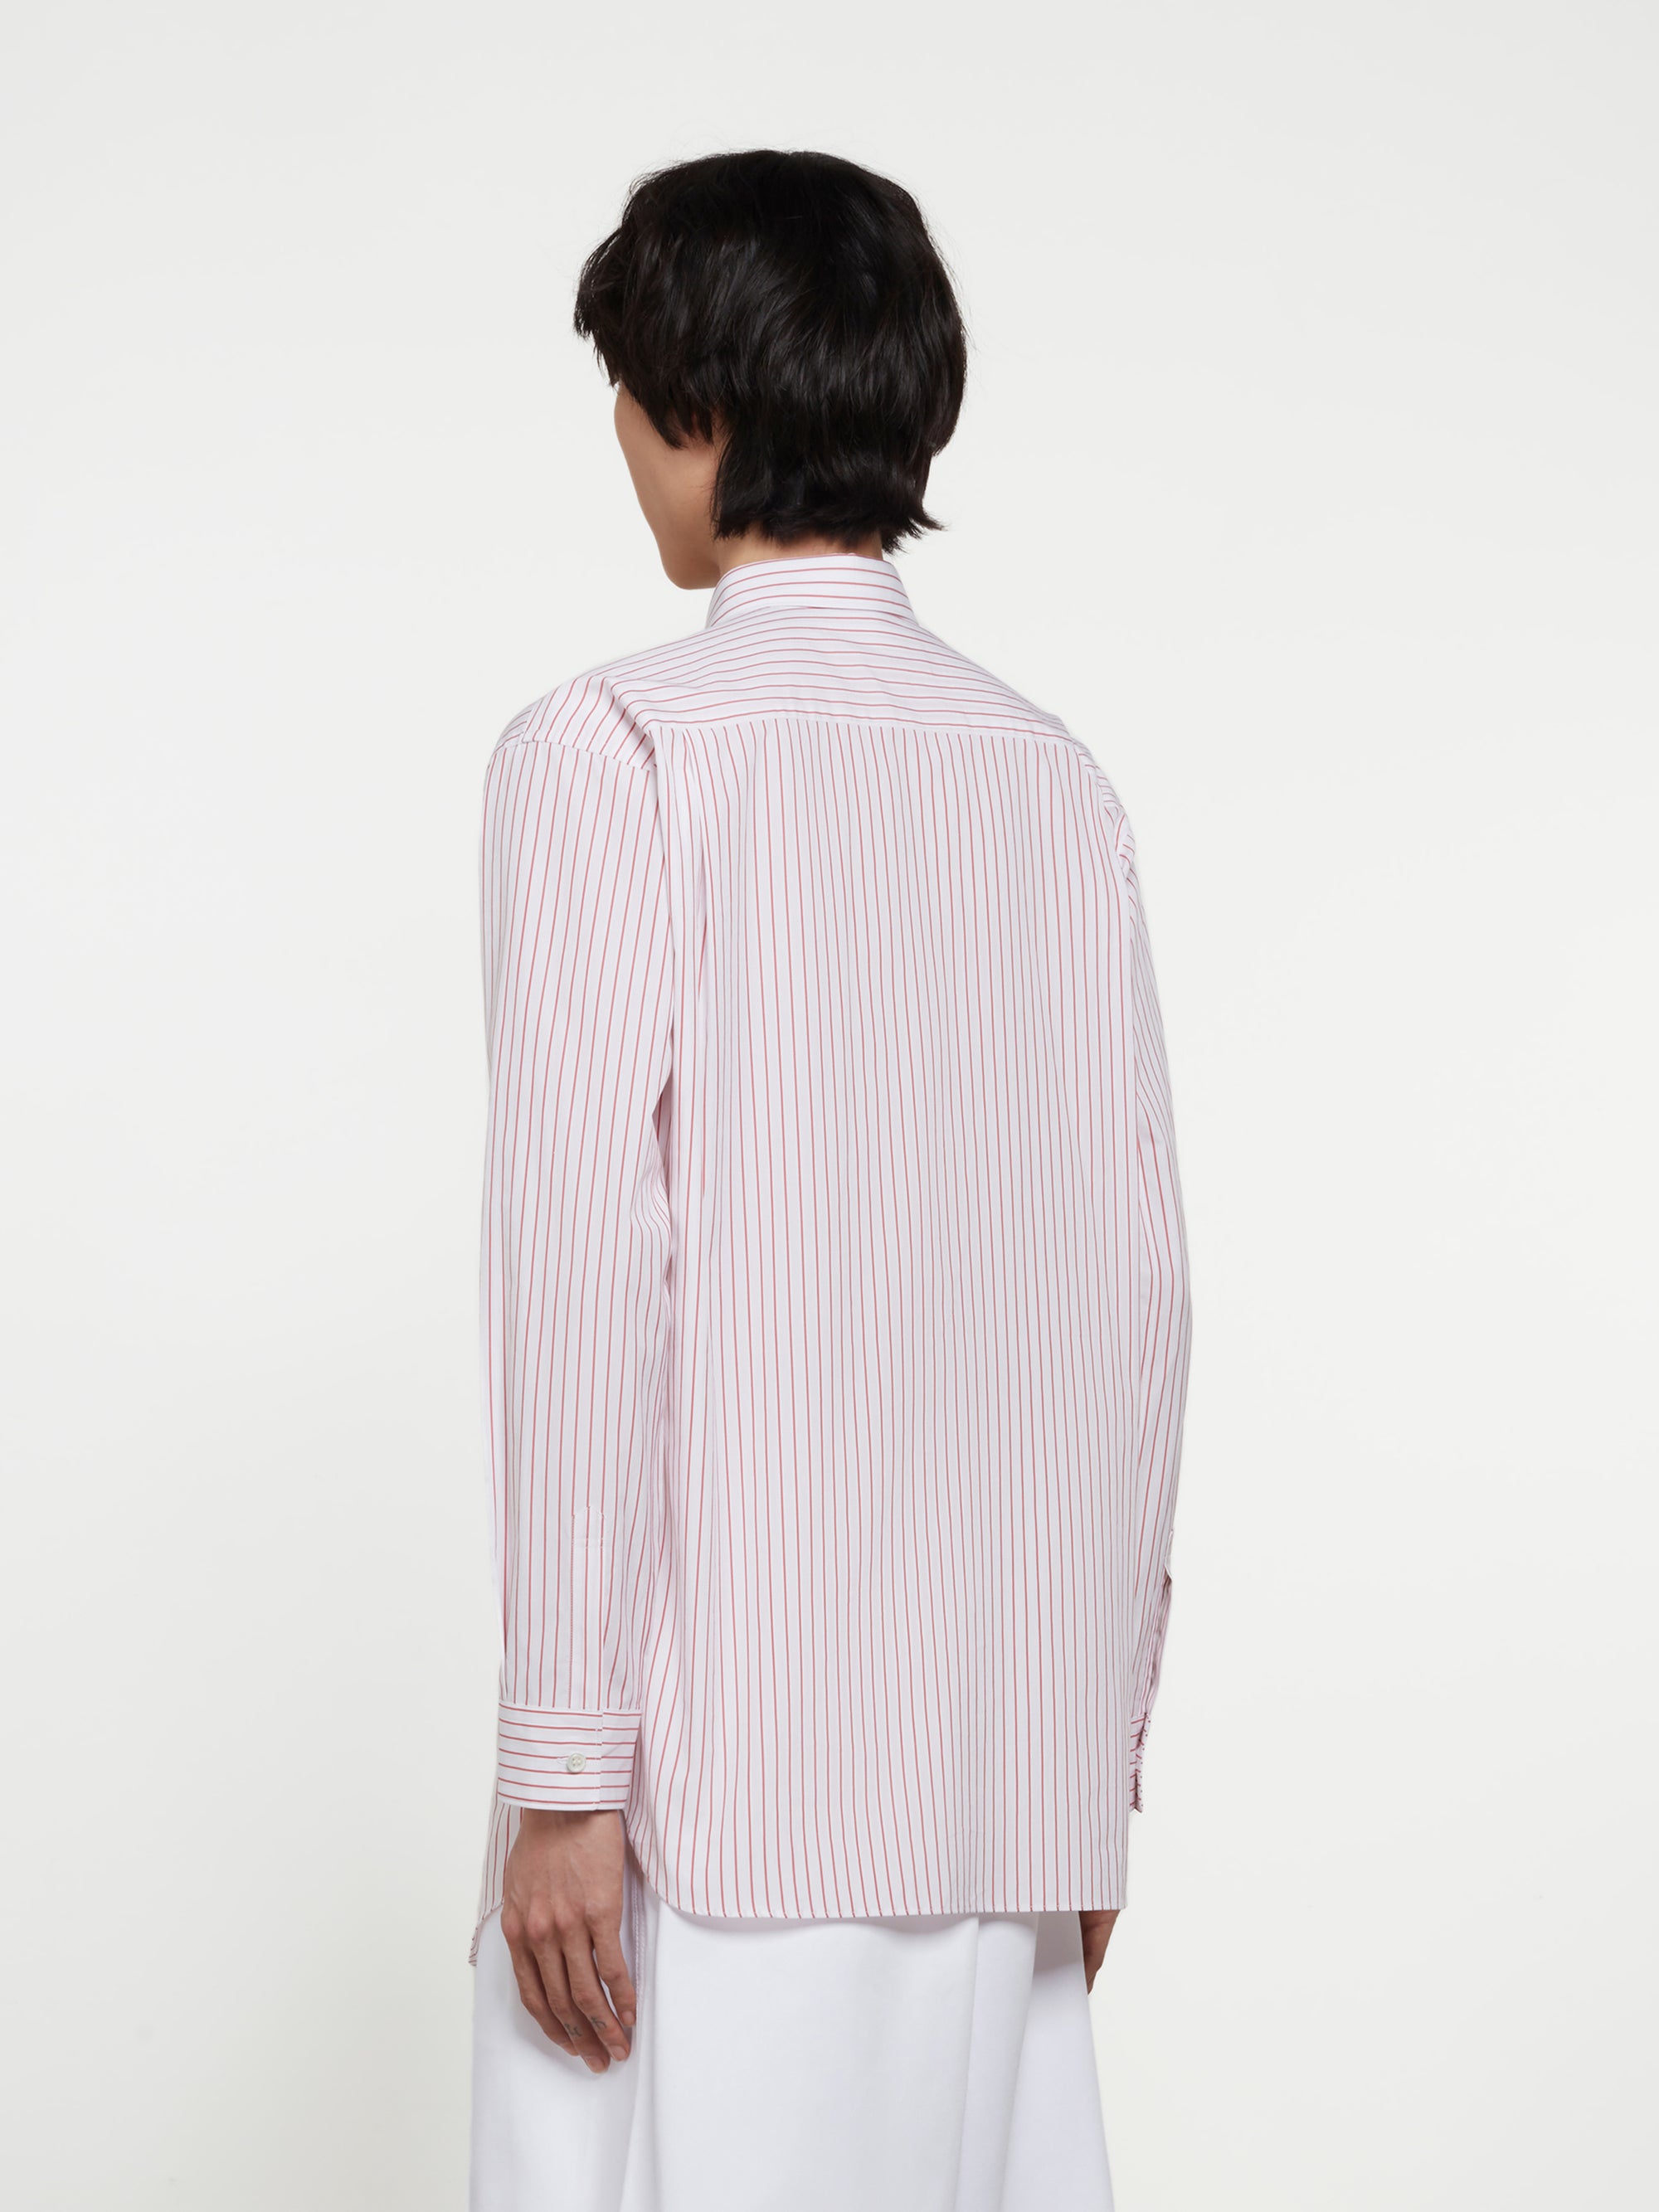 CDG Shirt - Lacoste Men's Cotton Check Shirt - (Print A-2) view 3